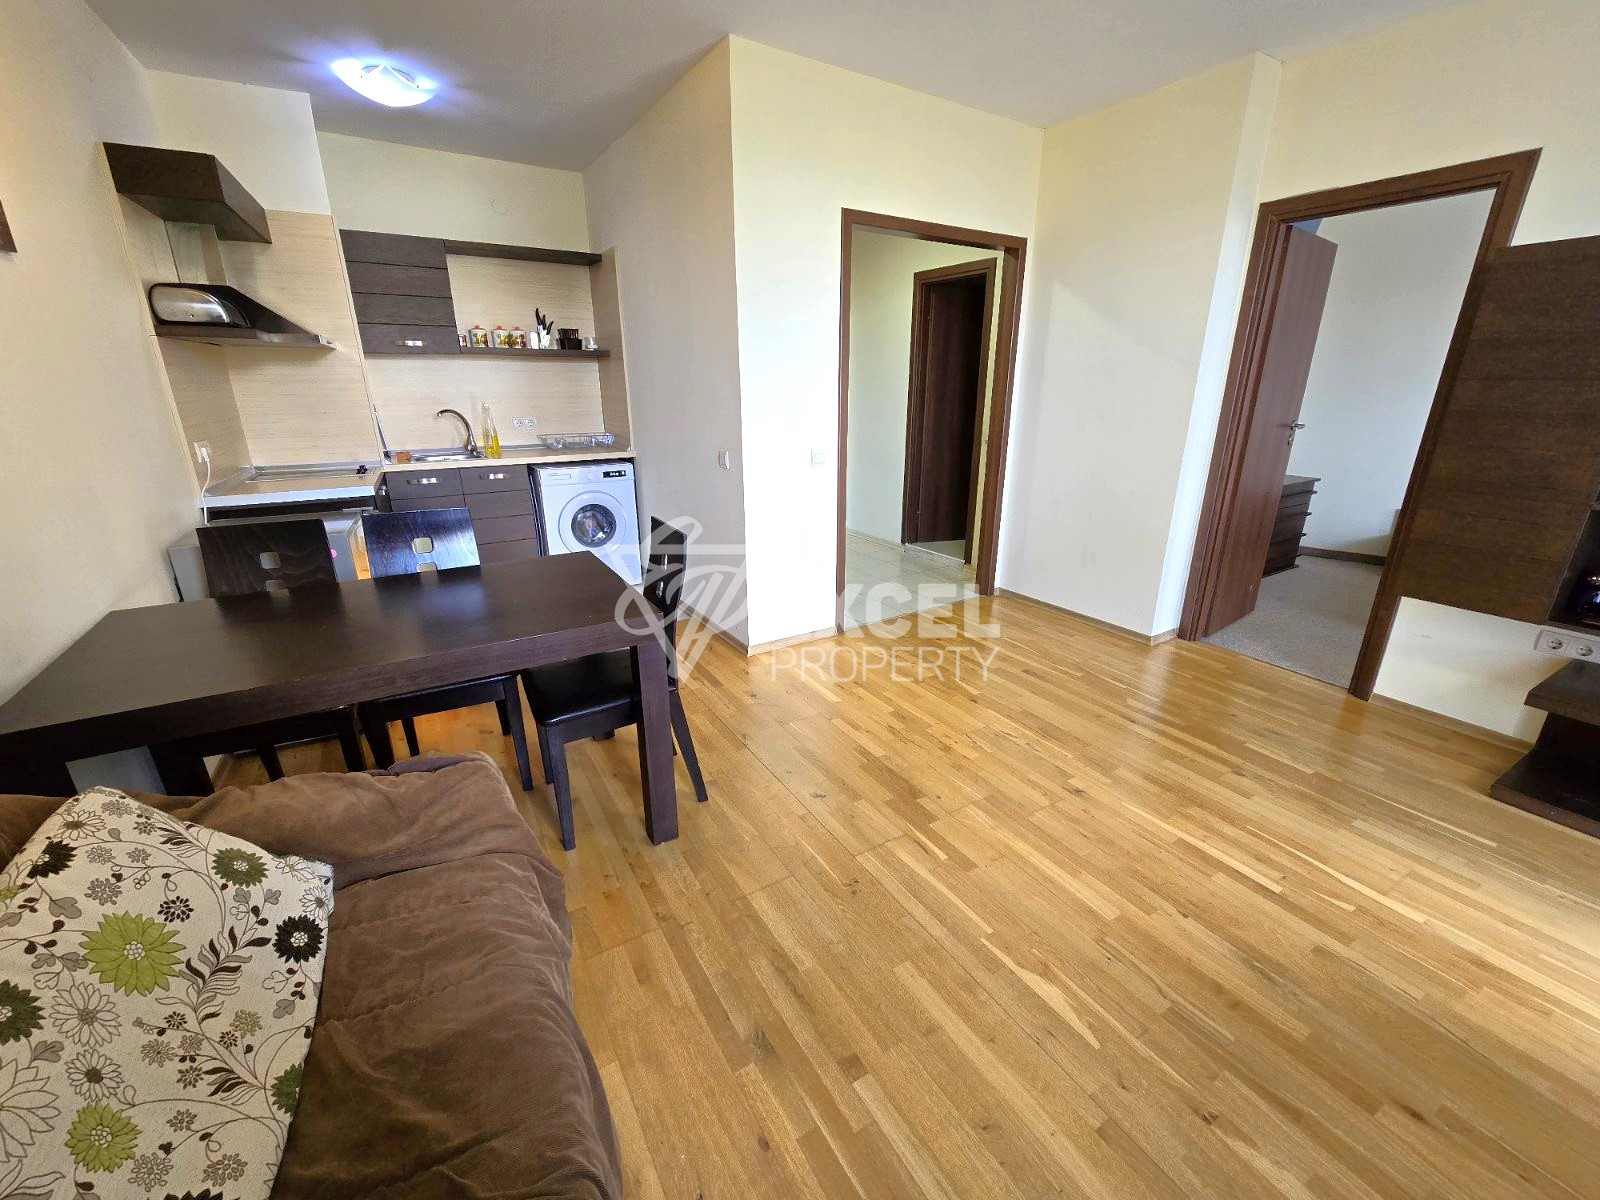 Двустаен апартамент на партерно ниво за продажба в комплекс All Seasons Club, Банско